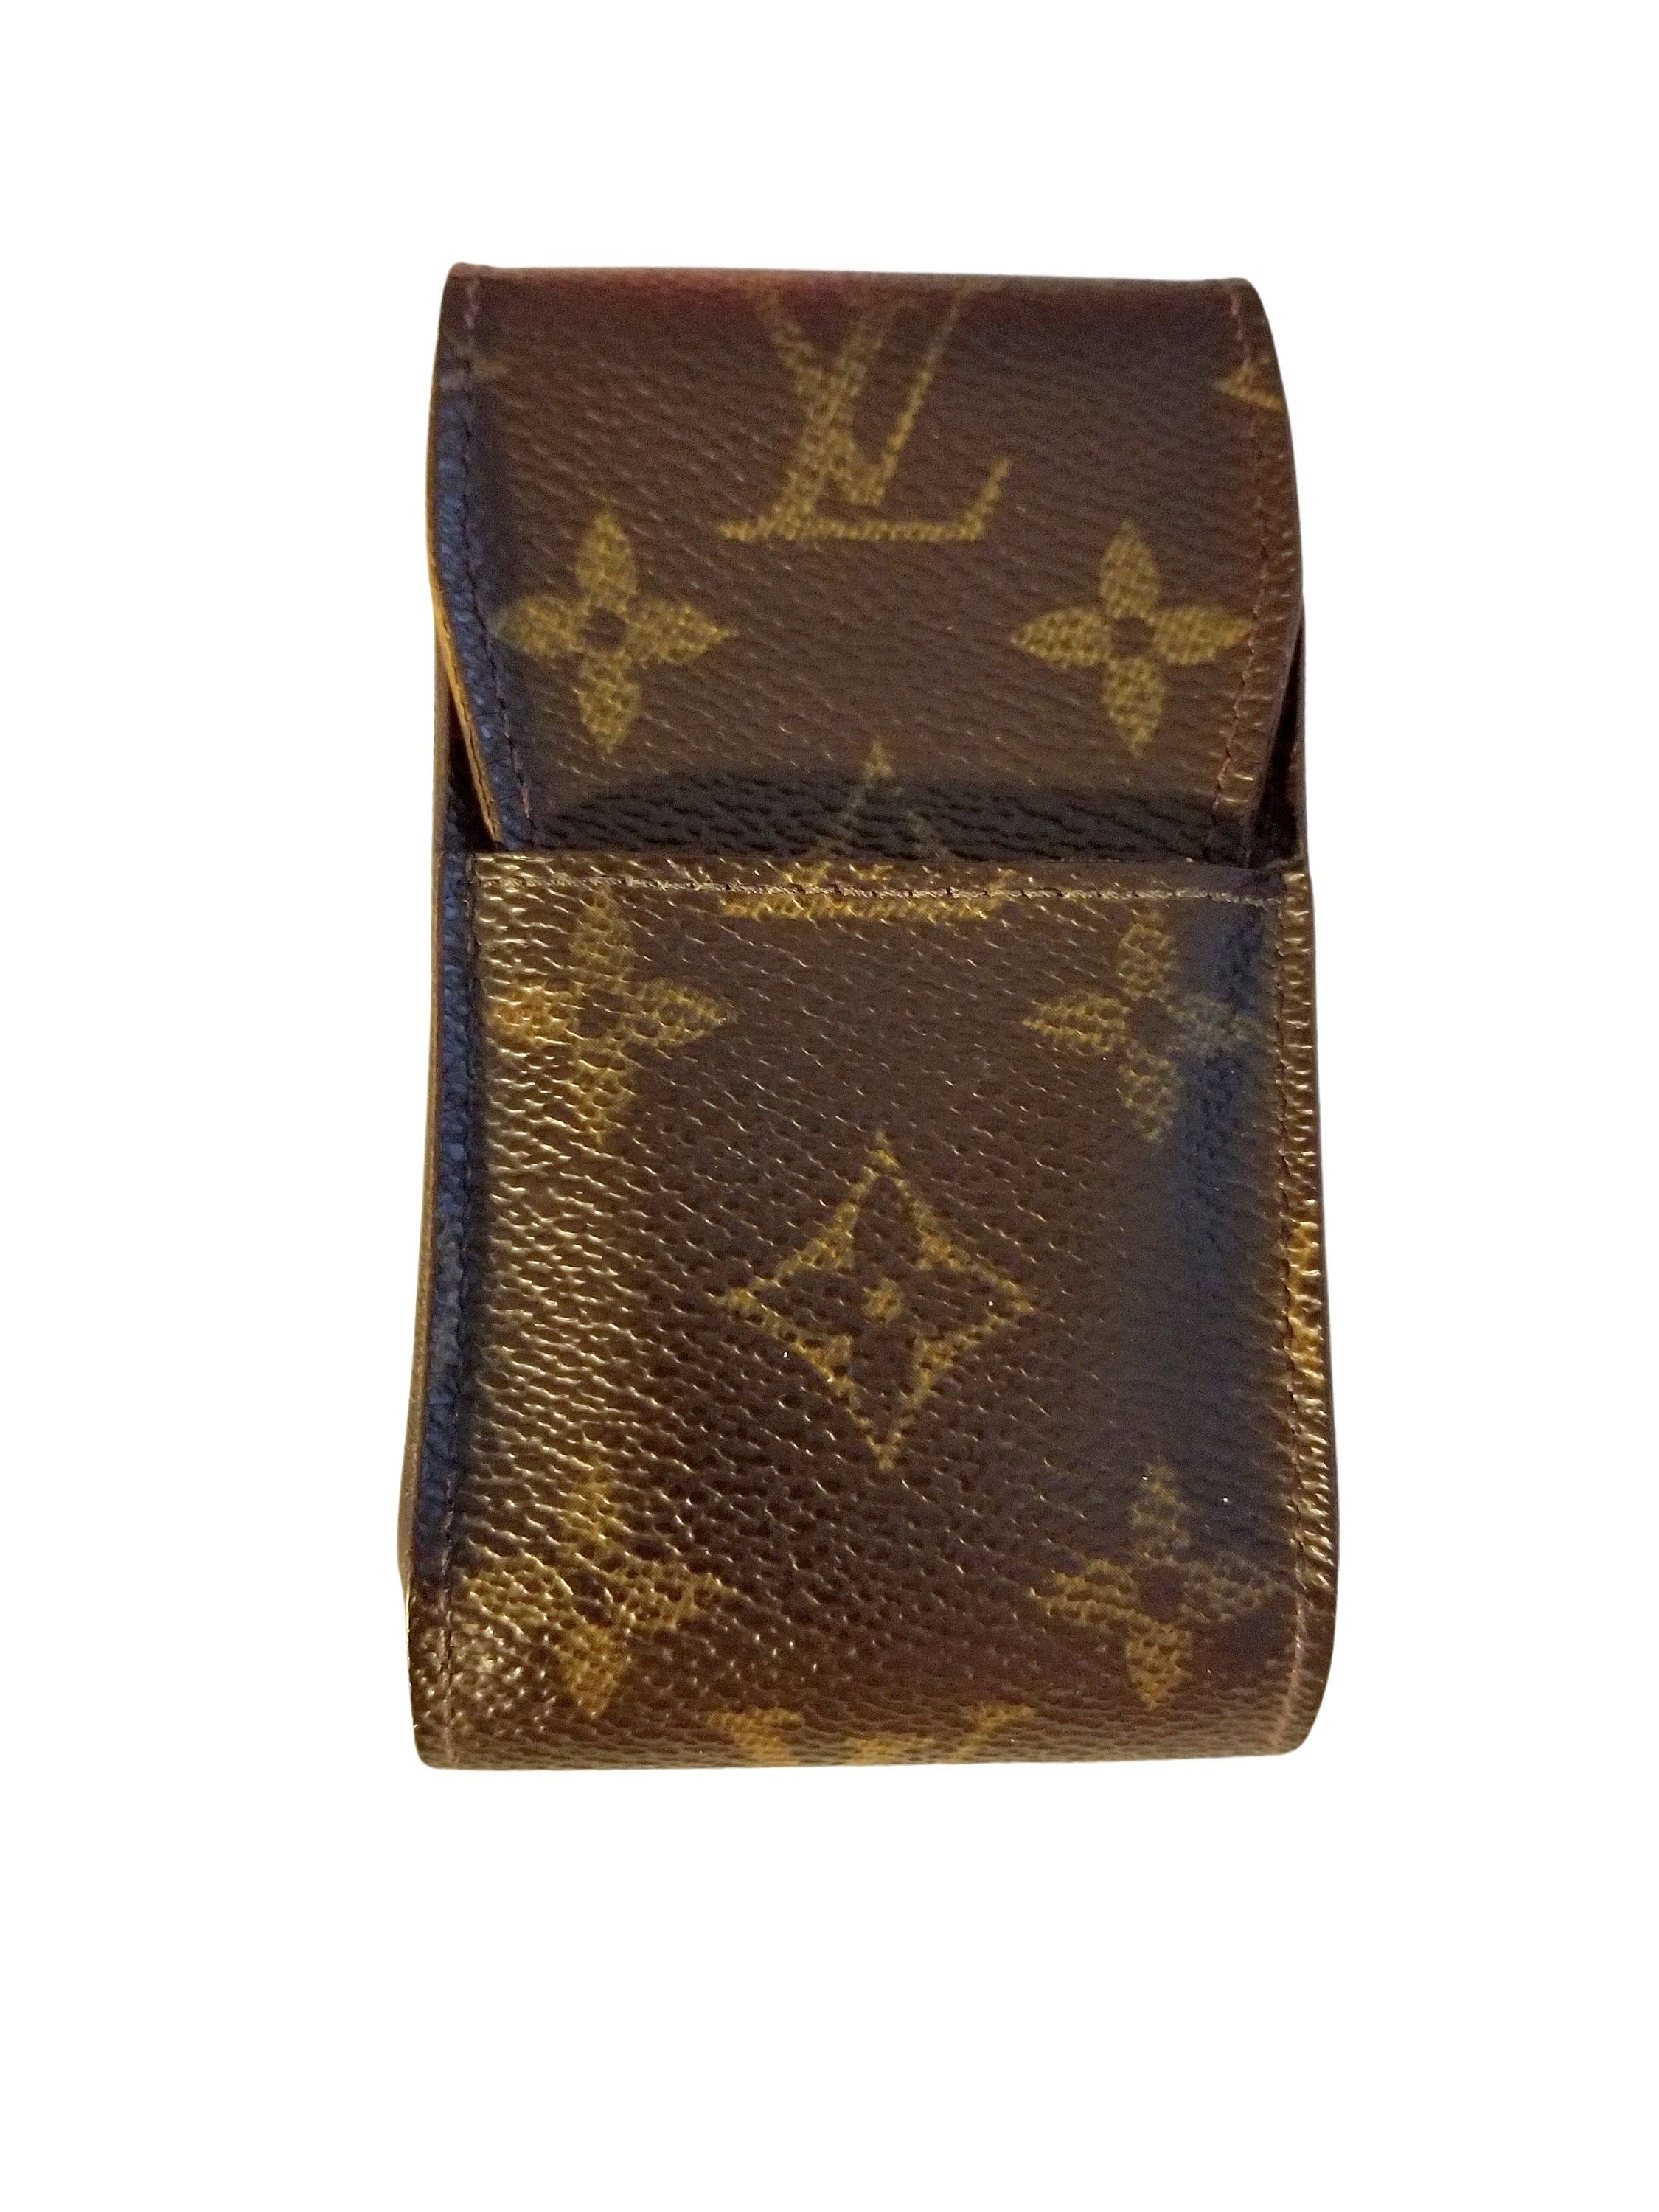 Louis Vuitton Small Wallet Keychain  Louis Vuitton Mini Wallet Keychain -  Leather - Aliexpress